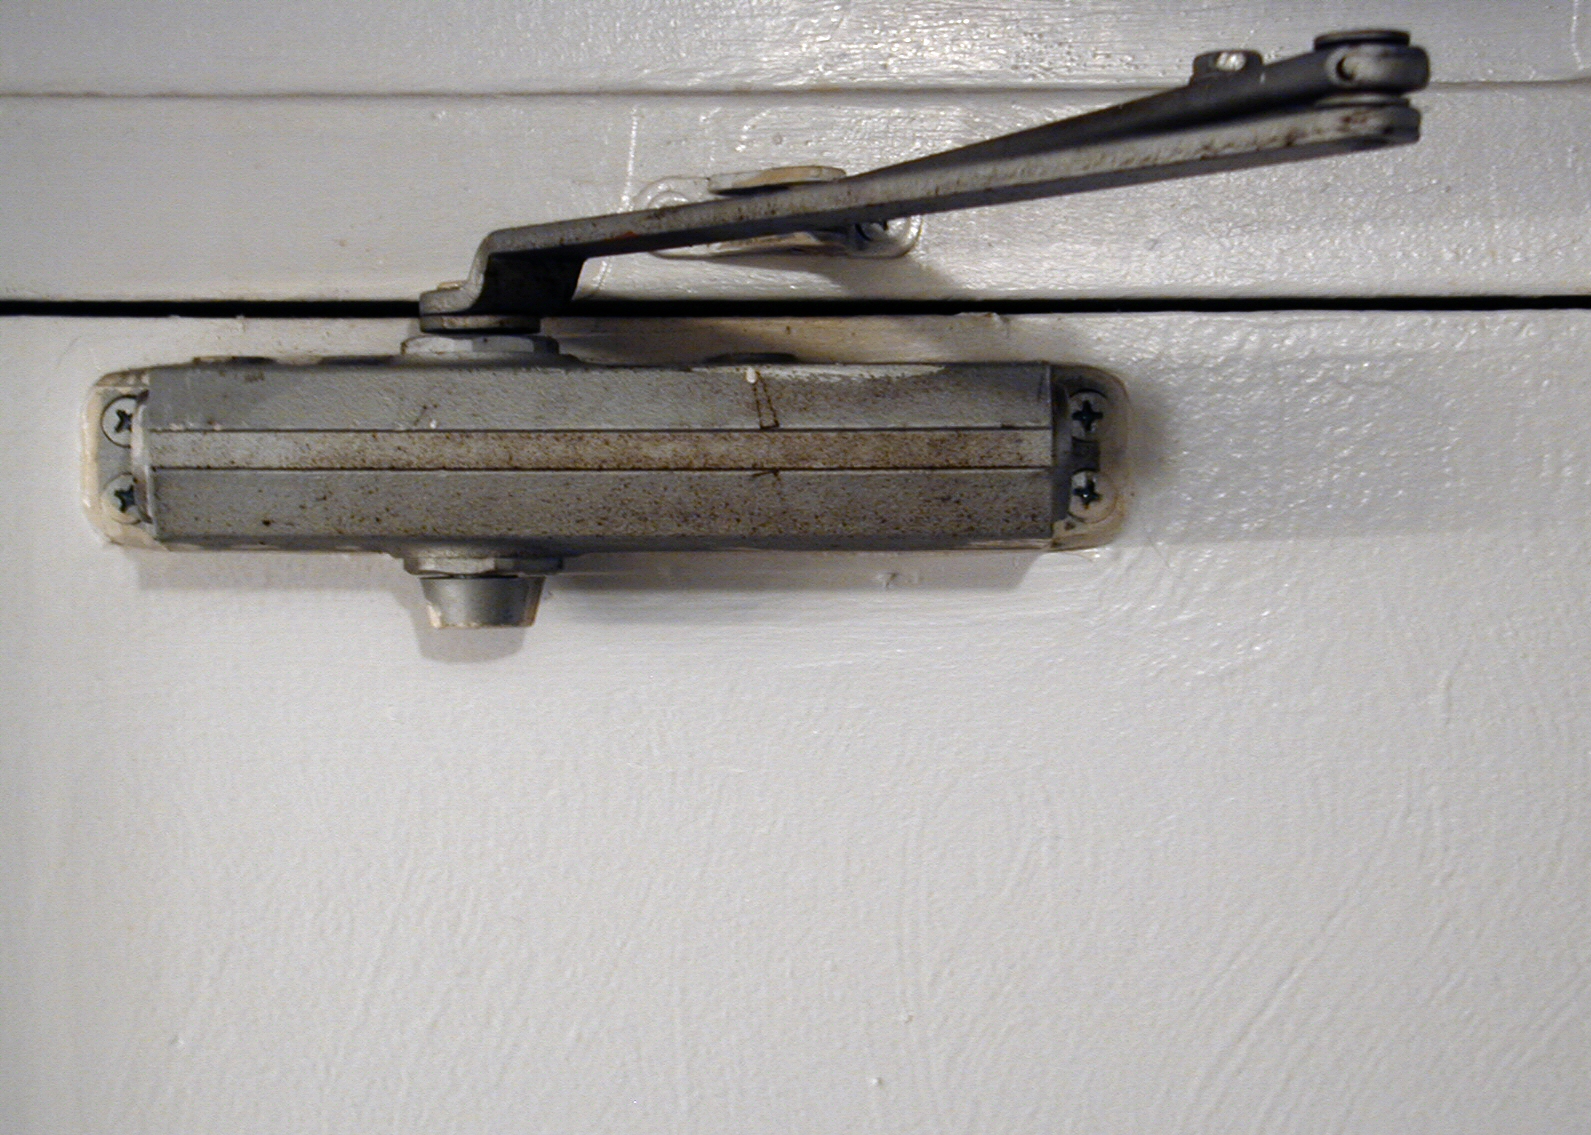 a closeup image of a small door opener